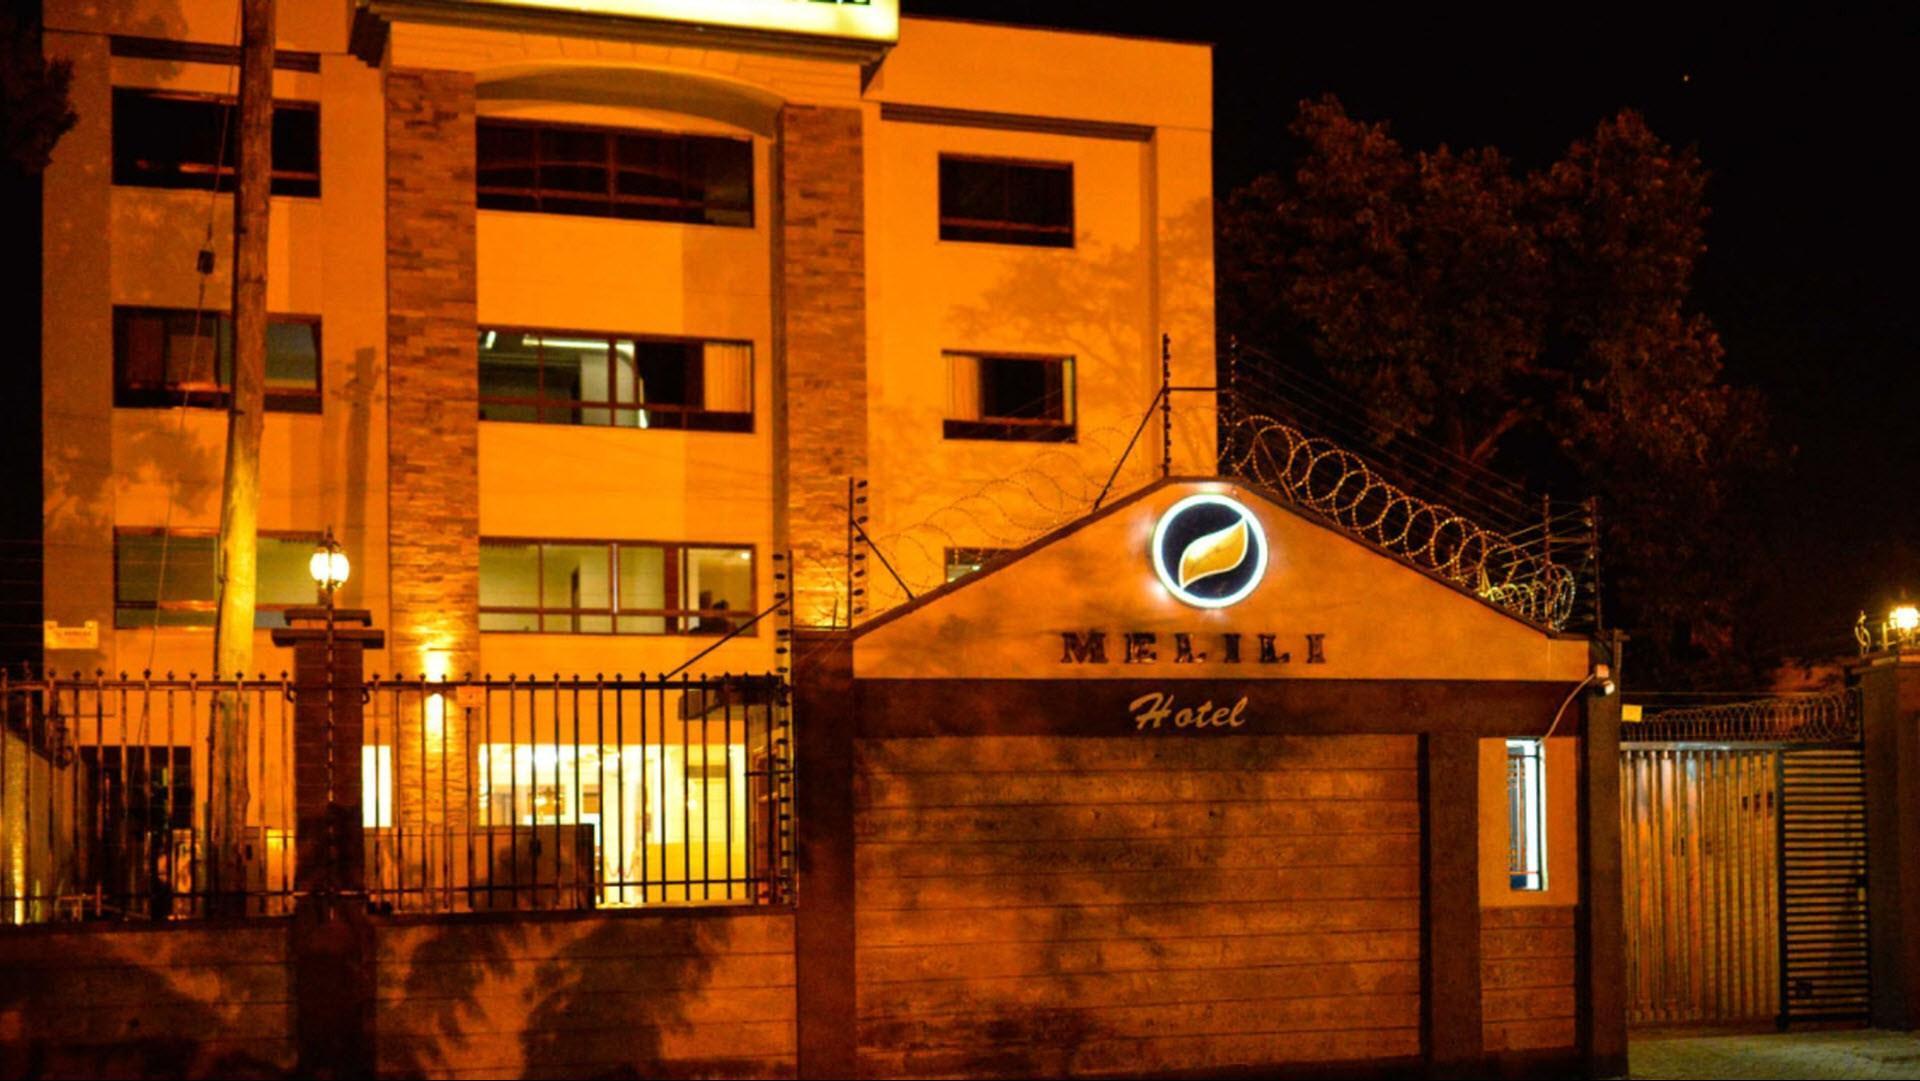 Melili Hotel in Nairobi, KE